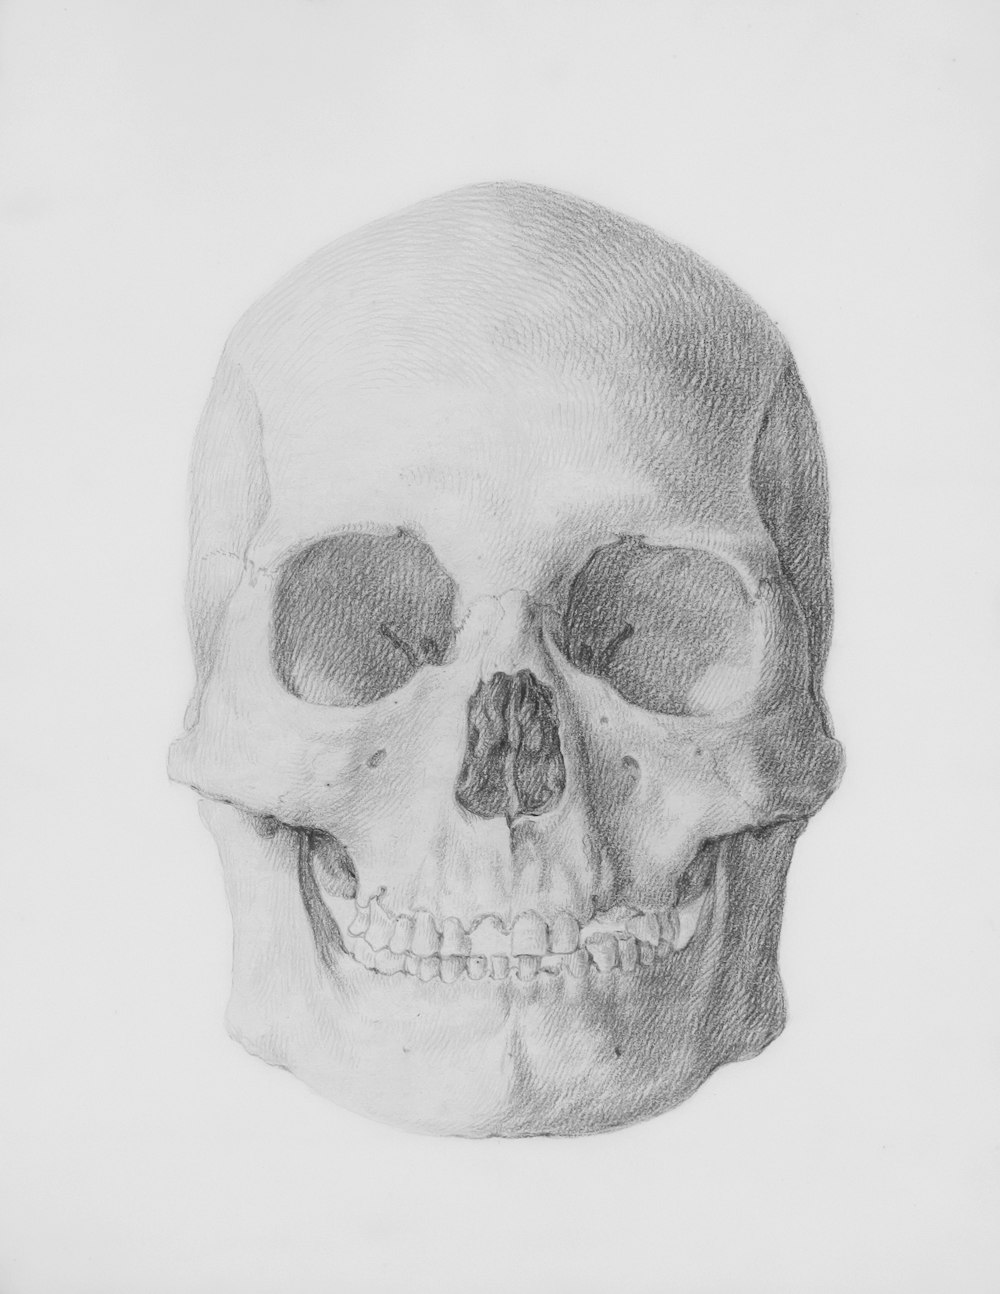 a pencil drawing of a human skull